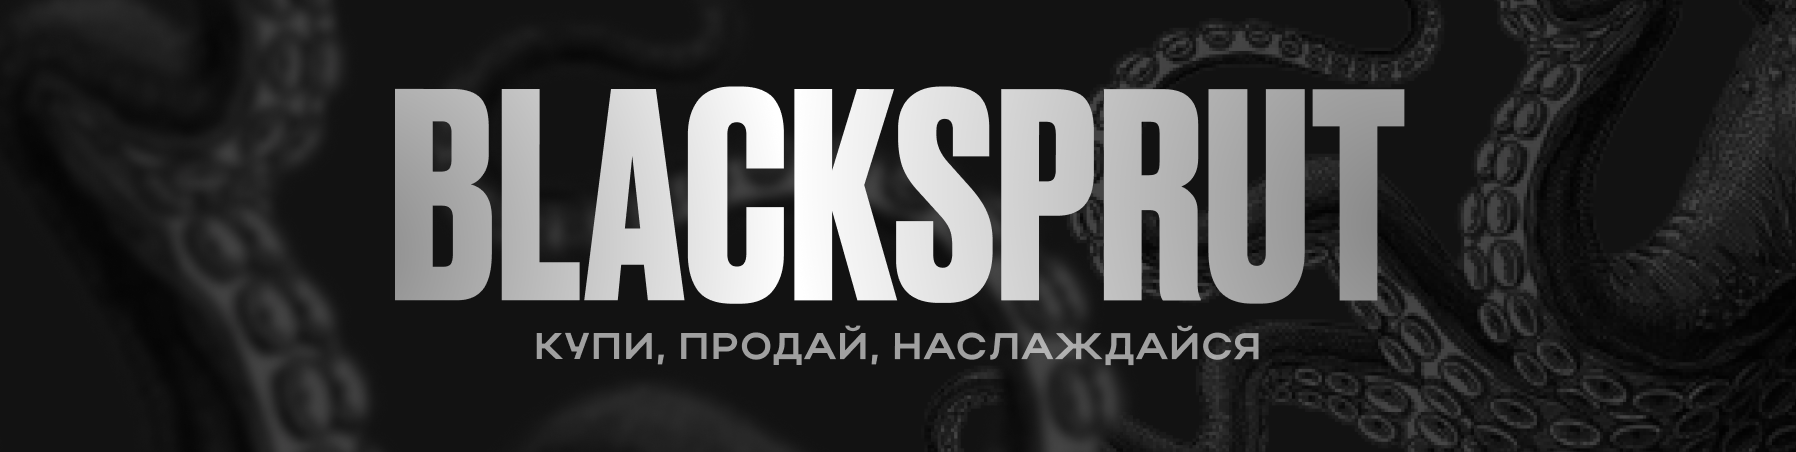 скачать blacksprut for android даркнет2web